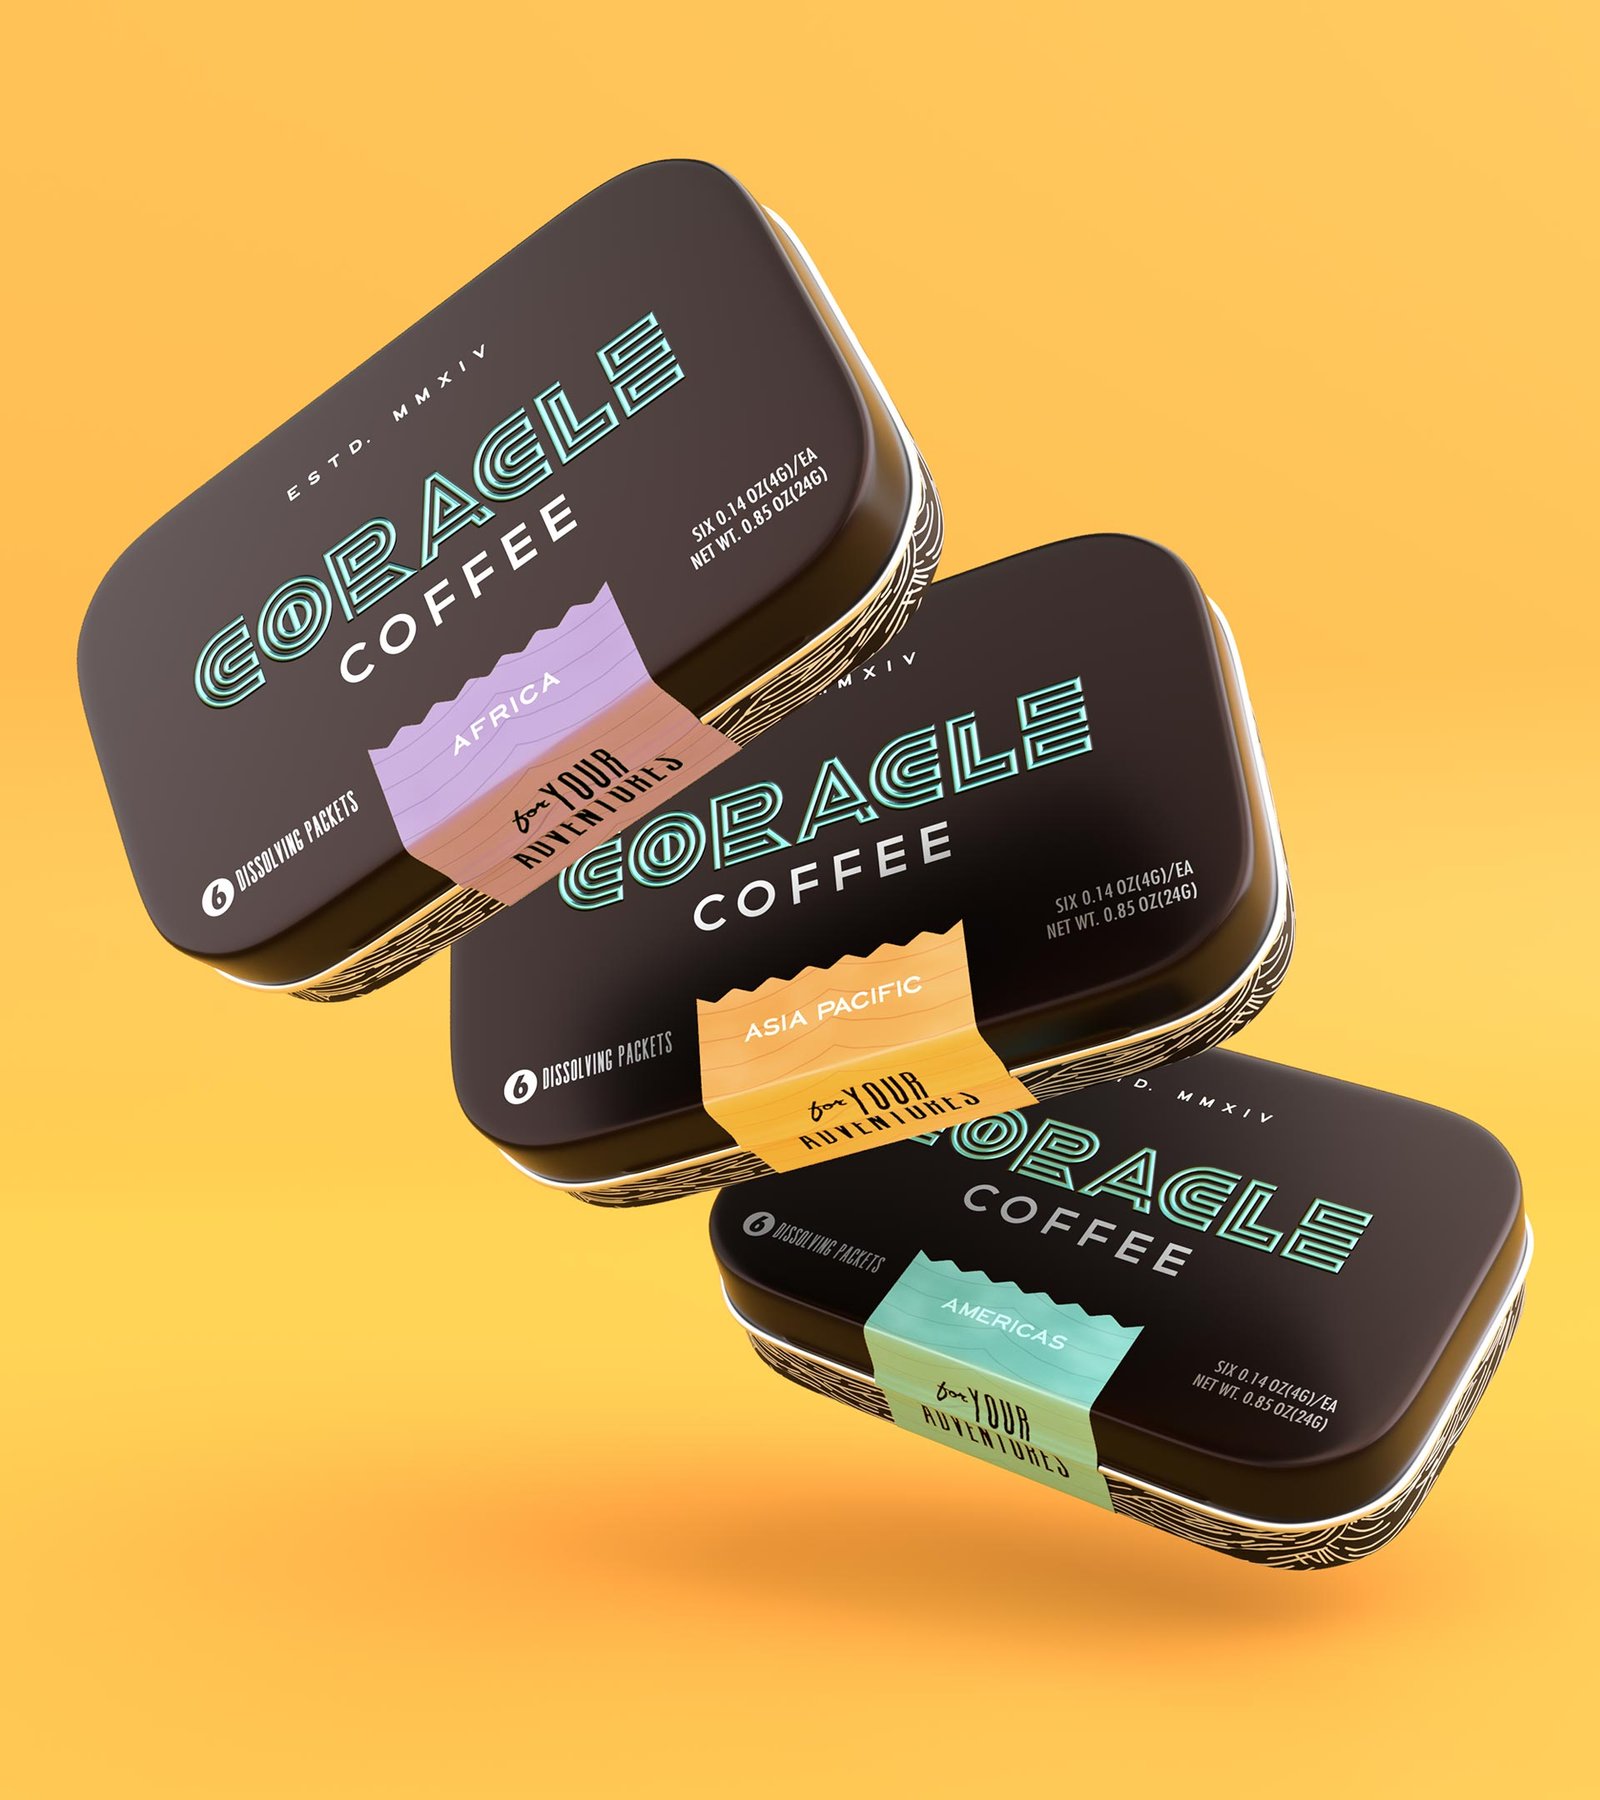 Coracle Coffee